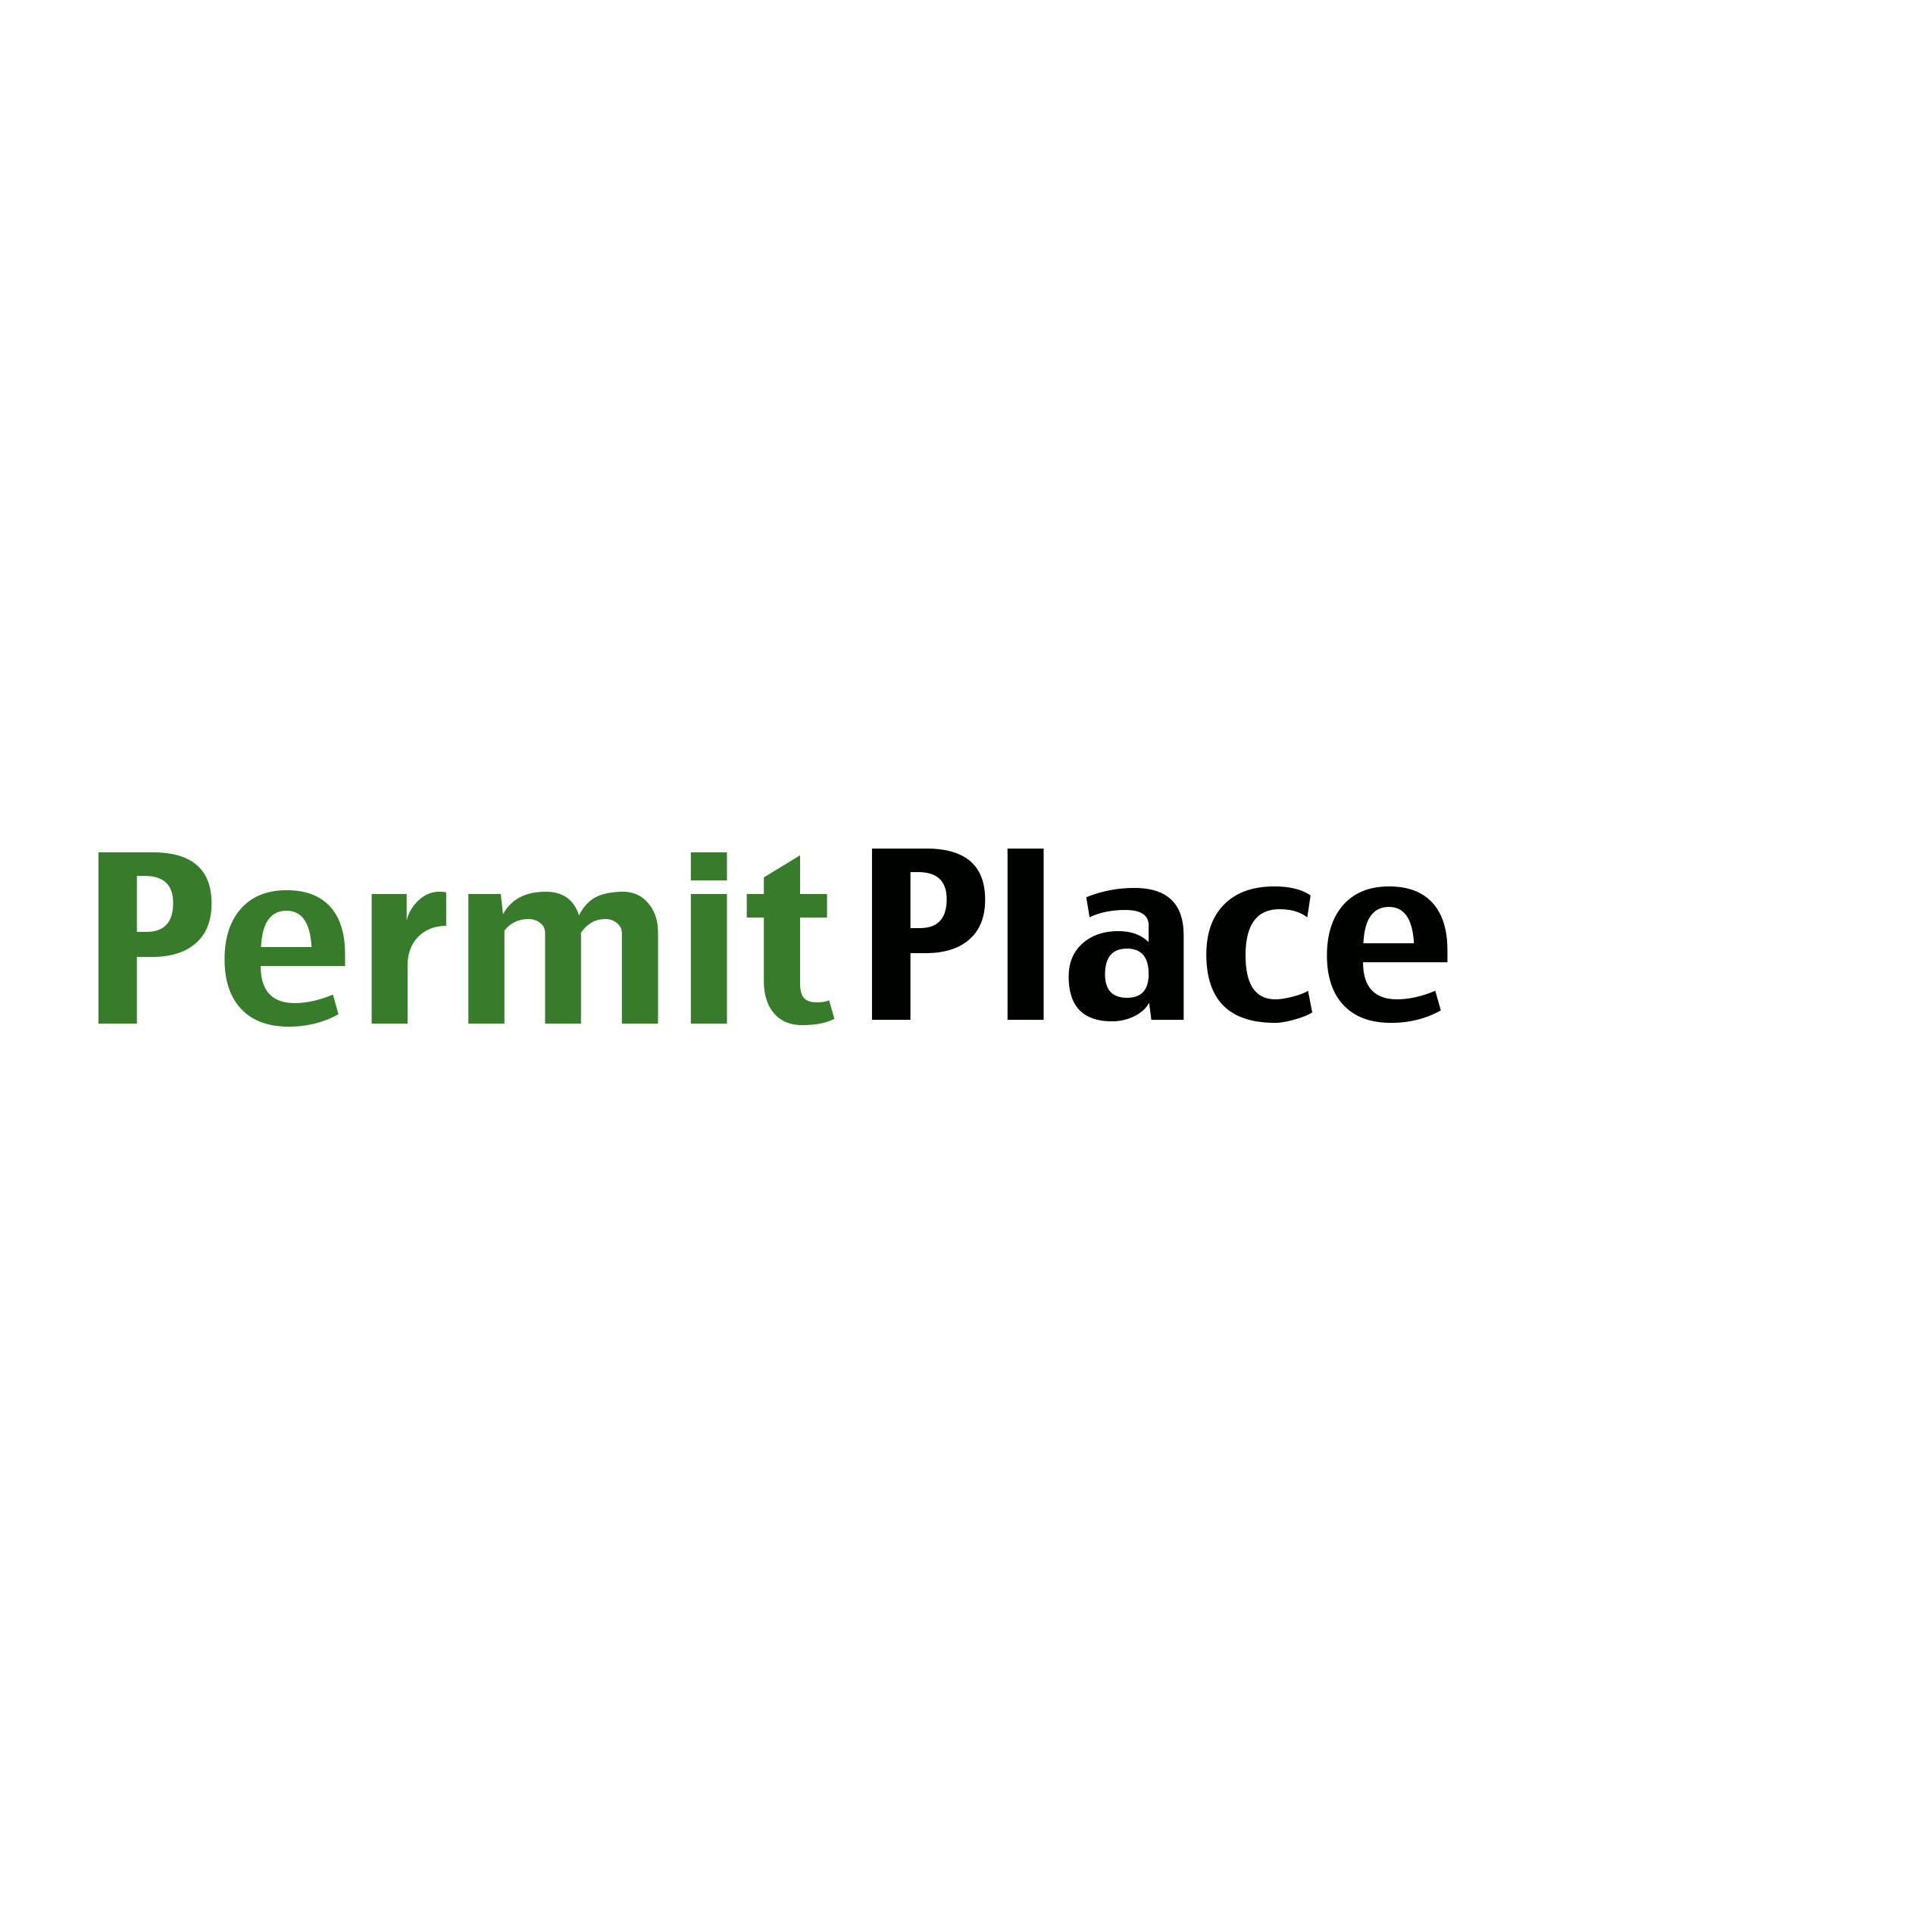 Permit Place - Sherman Oaks, CA 91423 - (818)786-8960 | ShowMeLocal.com